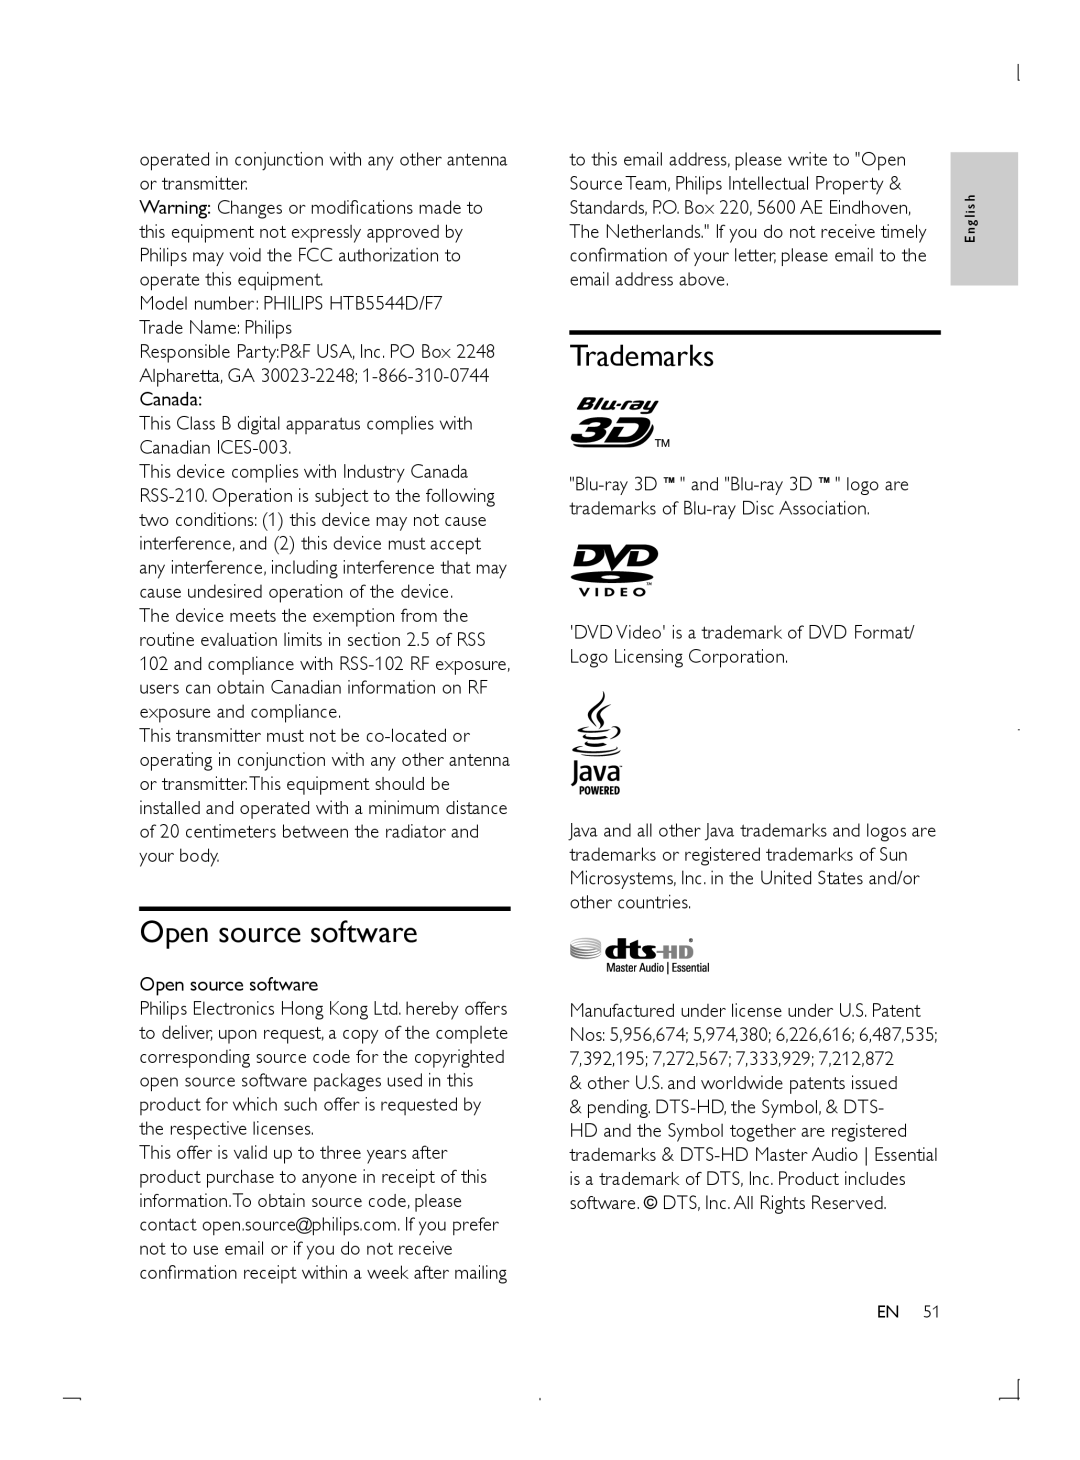 Philips HTB5544D manuel dutilisation Open source software, Trademarks 